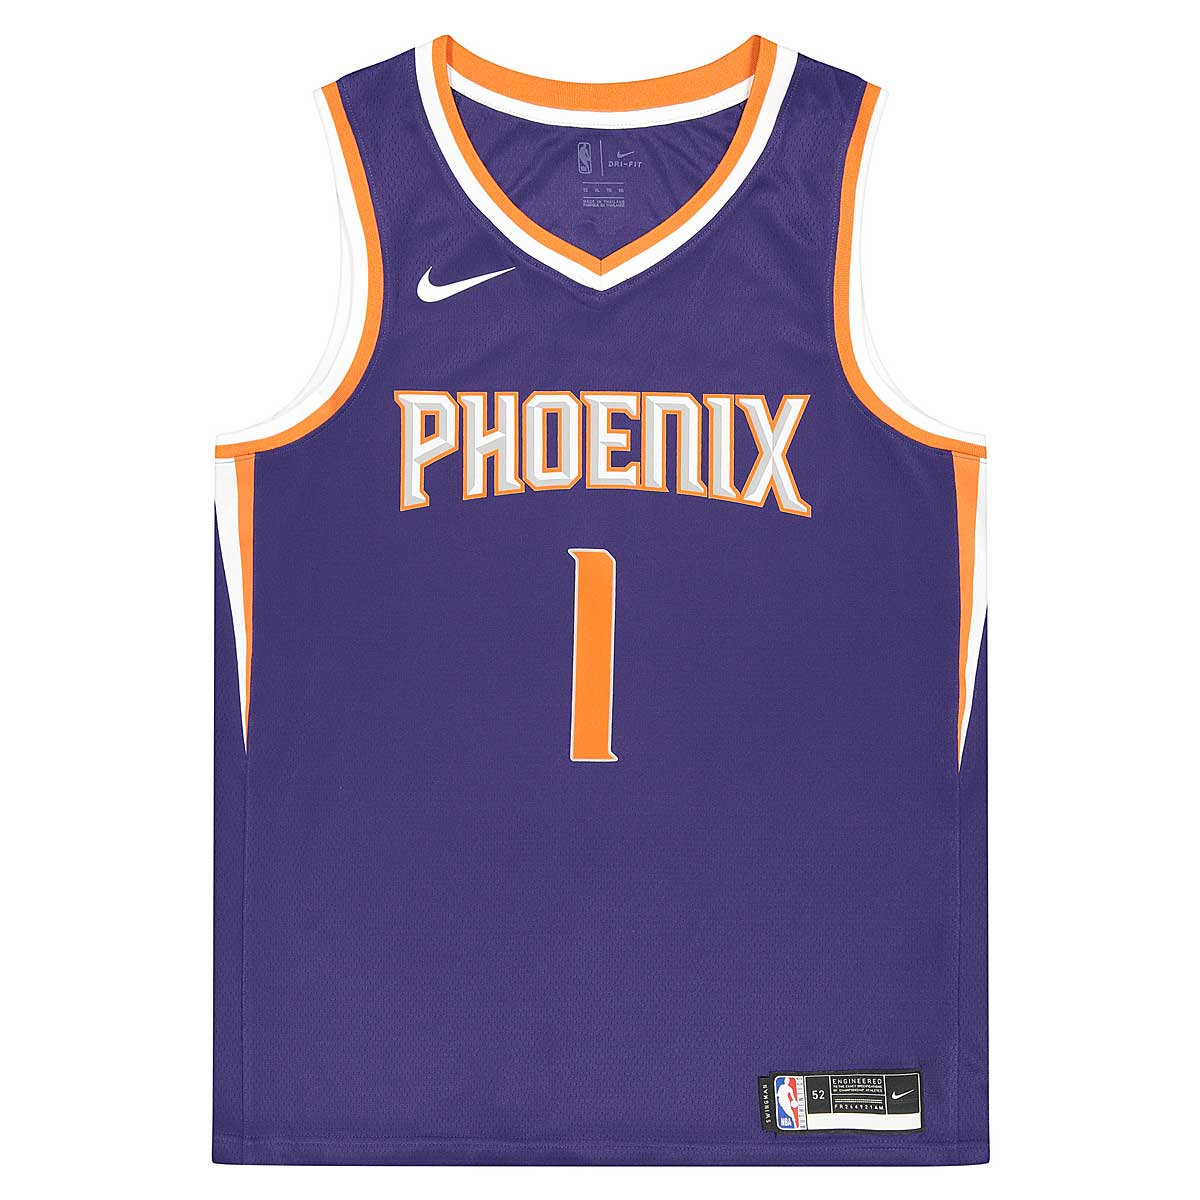 Phoenix Suns Devin Booker #1 2020 Nba New Arrival White Jersey